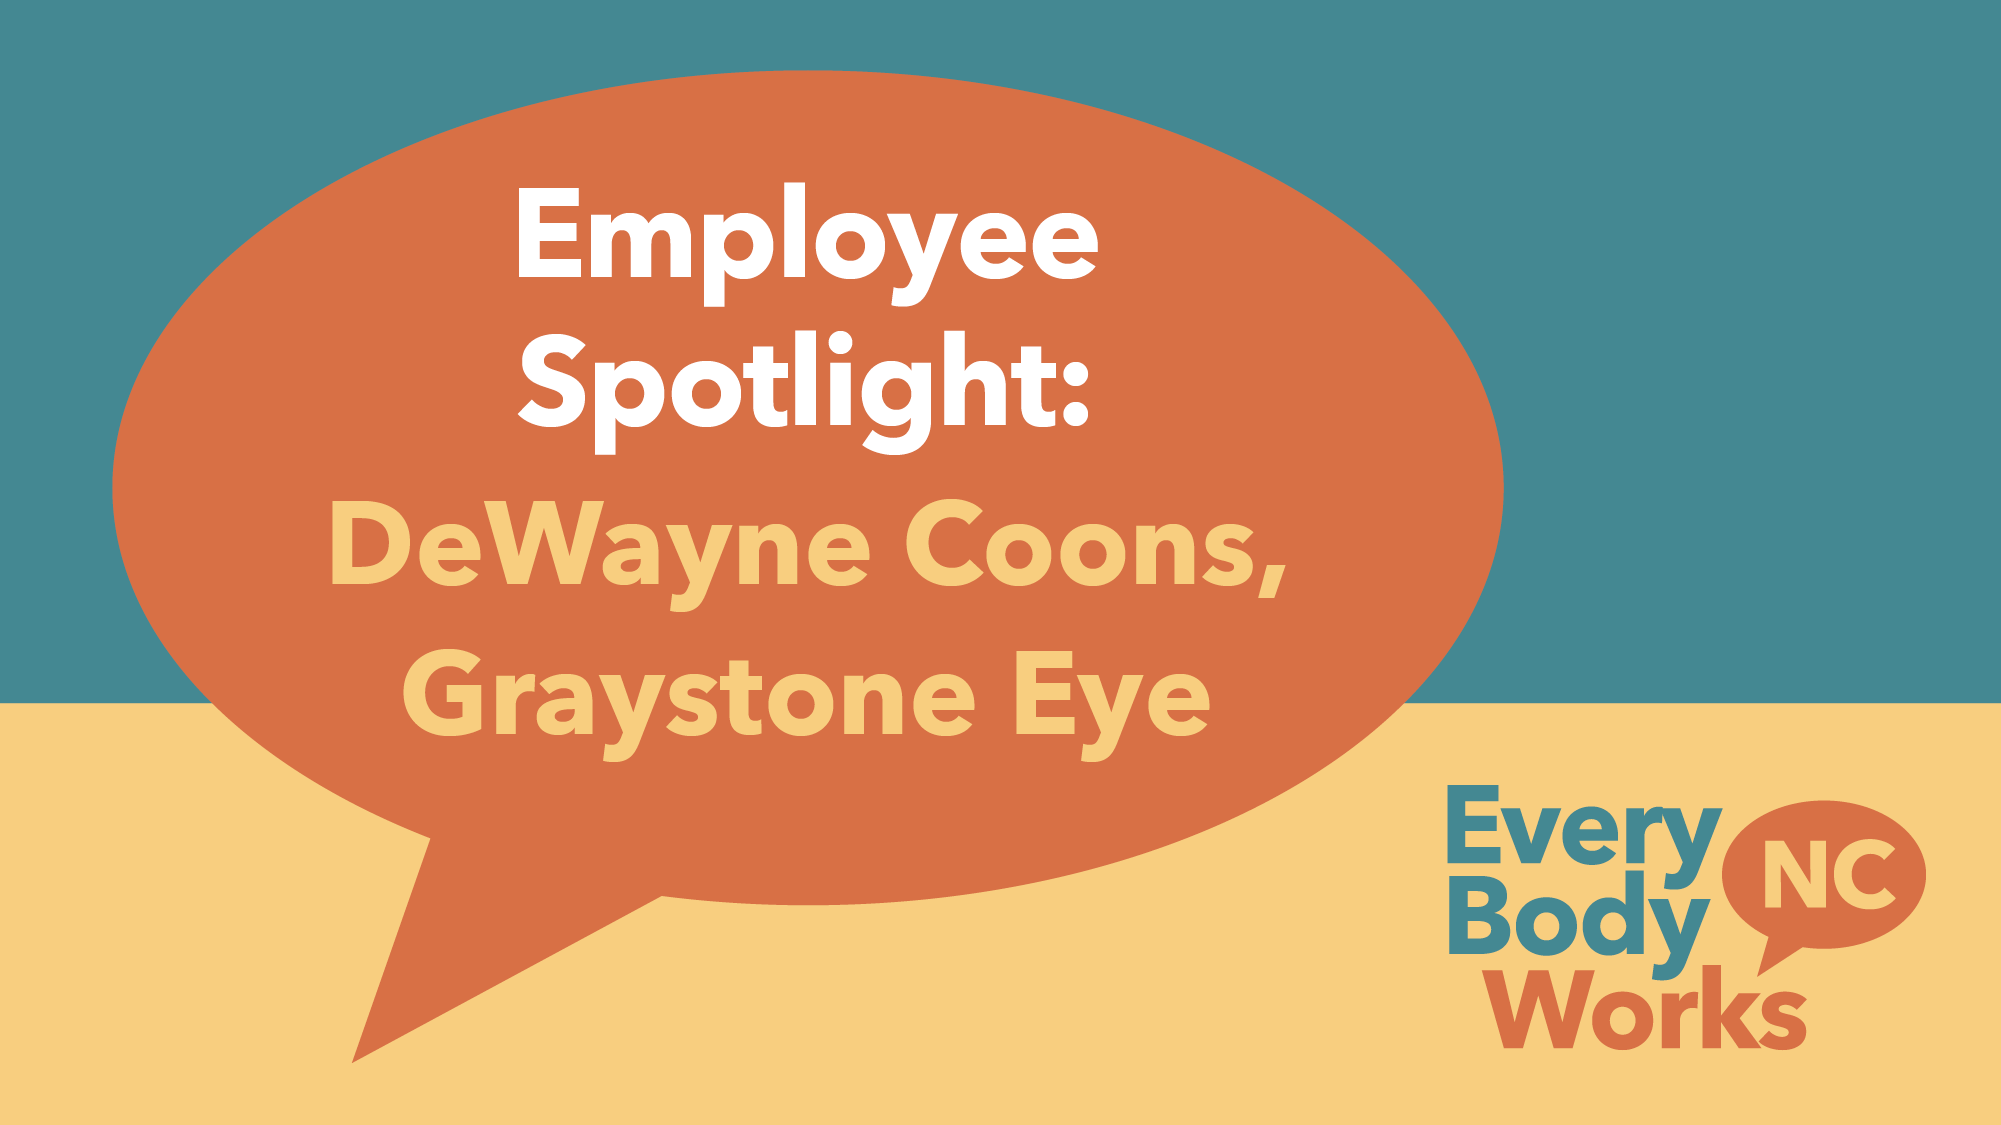 Employee Spotlight: DeWayne Coons, Graystone Eye